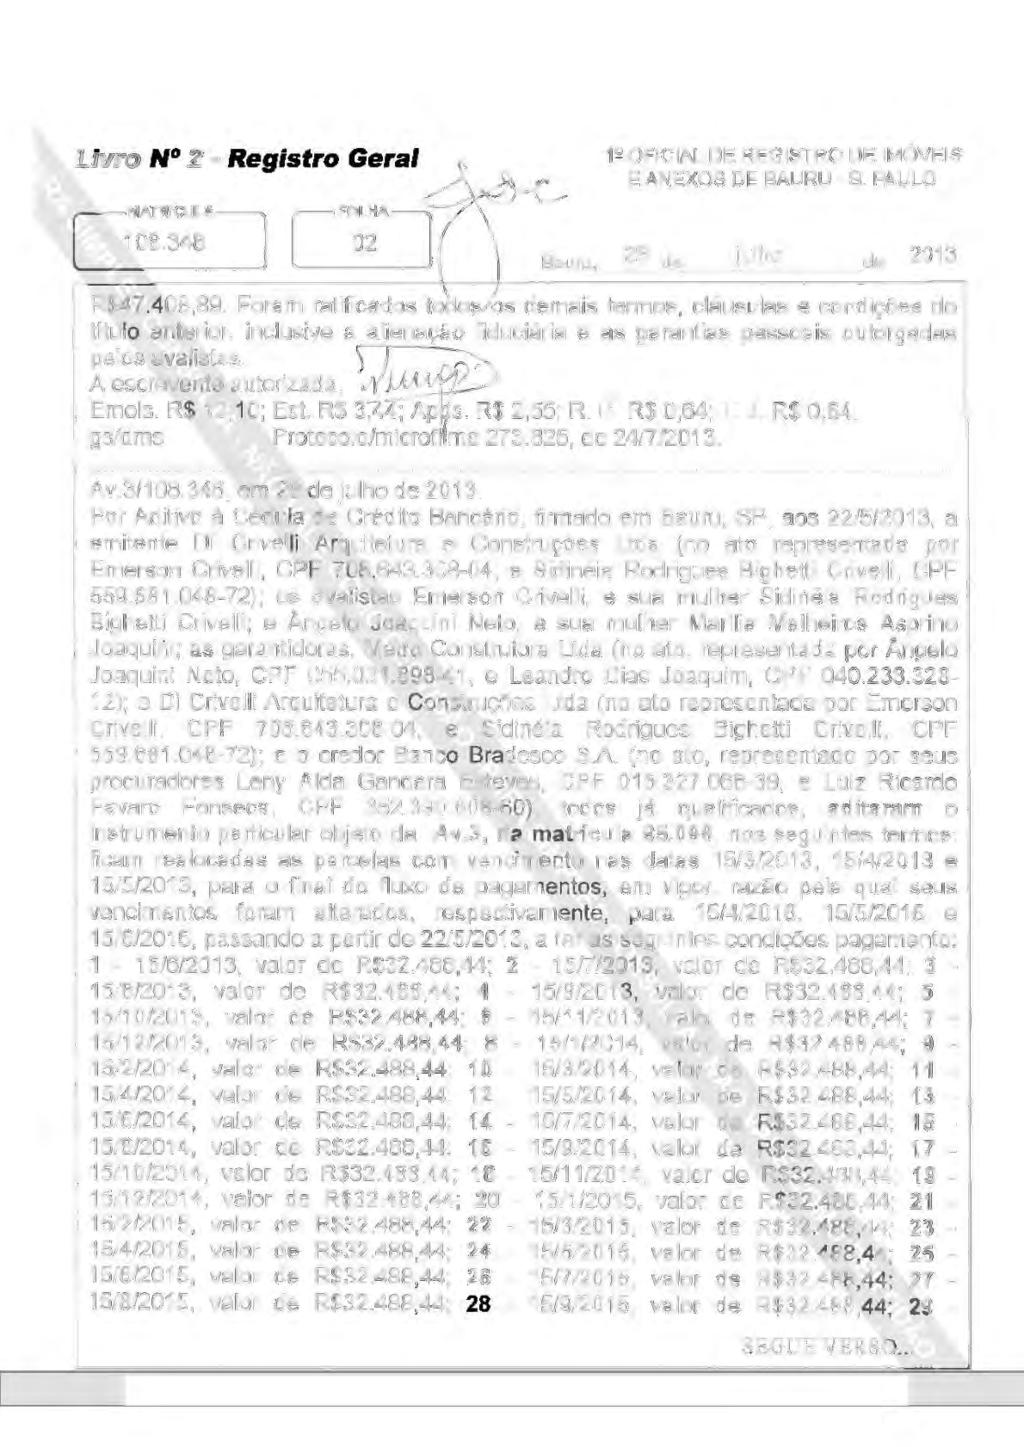 Livro N 2 - Registro Geral 1~ OFICIAL DE REGISTRO DE IMÓVEIS E ANEXOS DE BAURU - S. PAULO Bauru, 29 de julho de 2013 R$47.408,89.